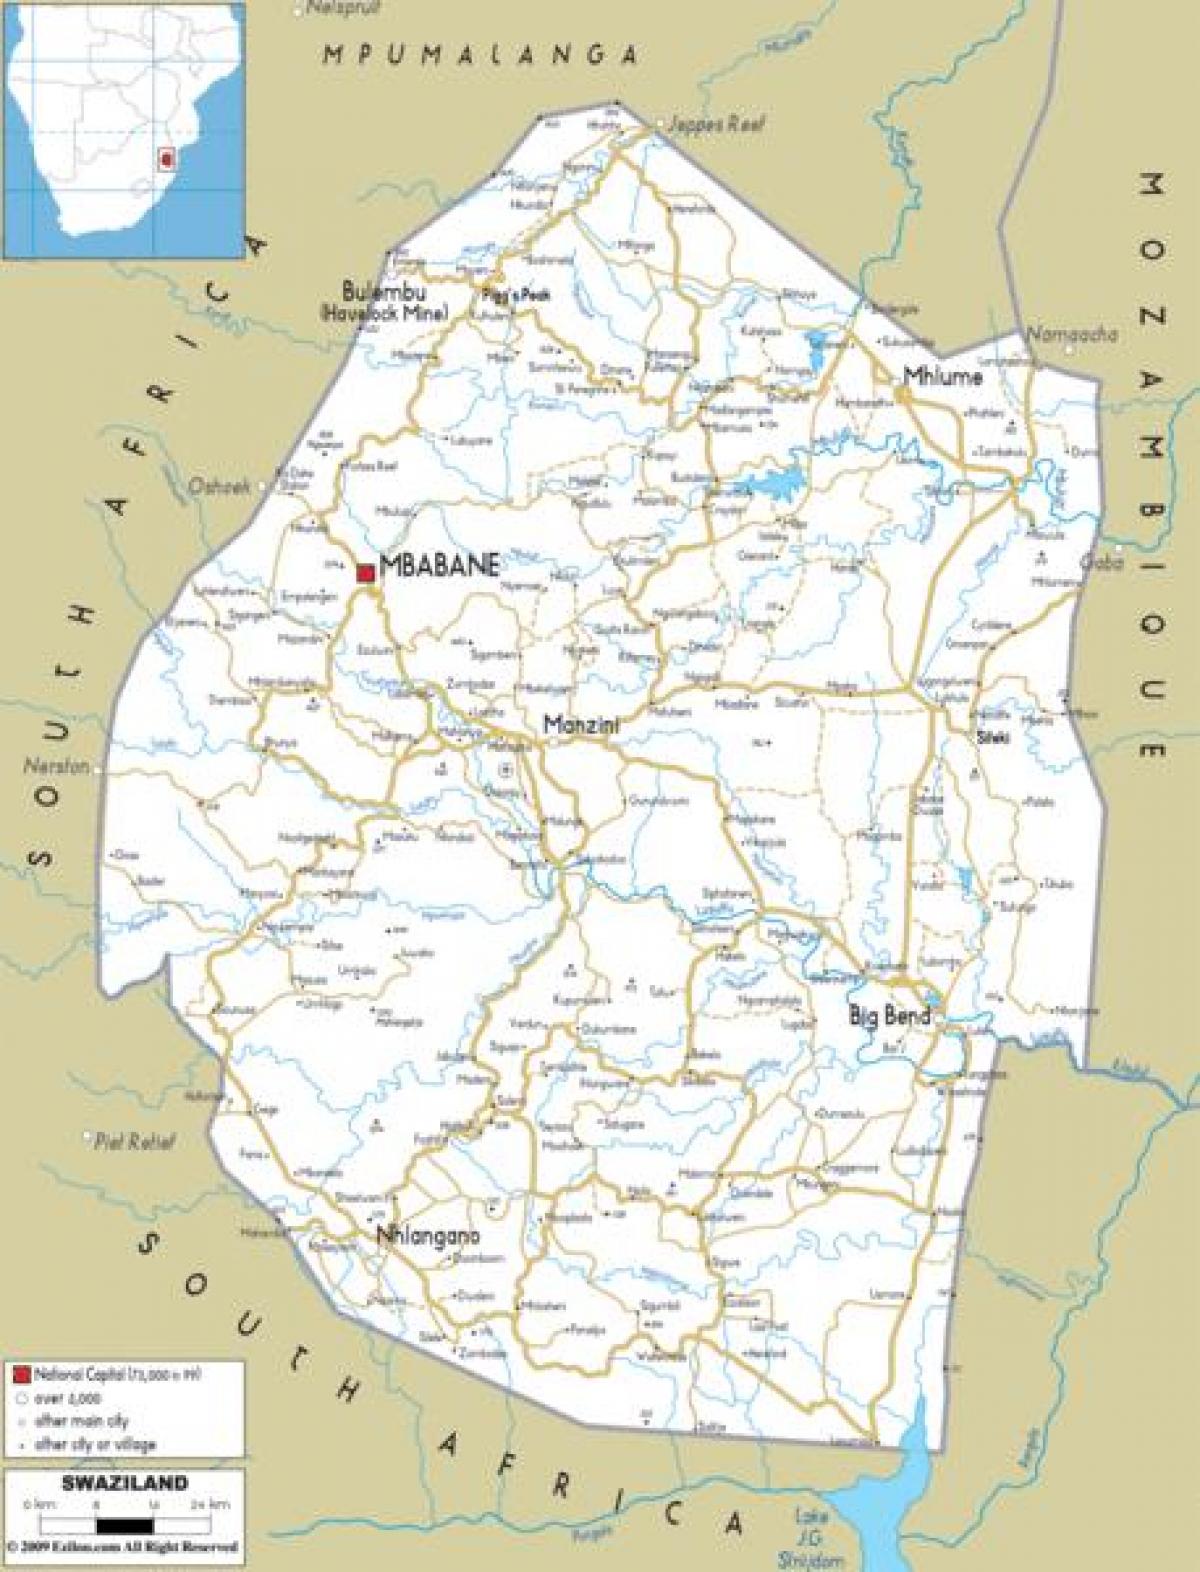 Mapa de Swazilàndia mbabane